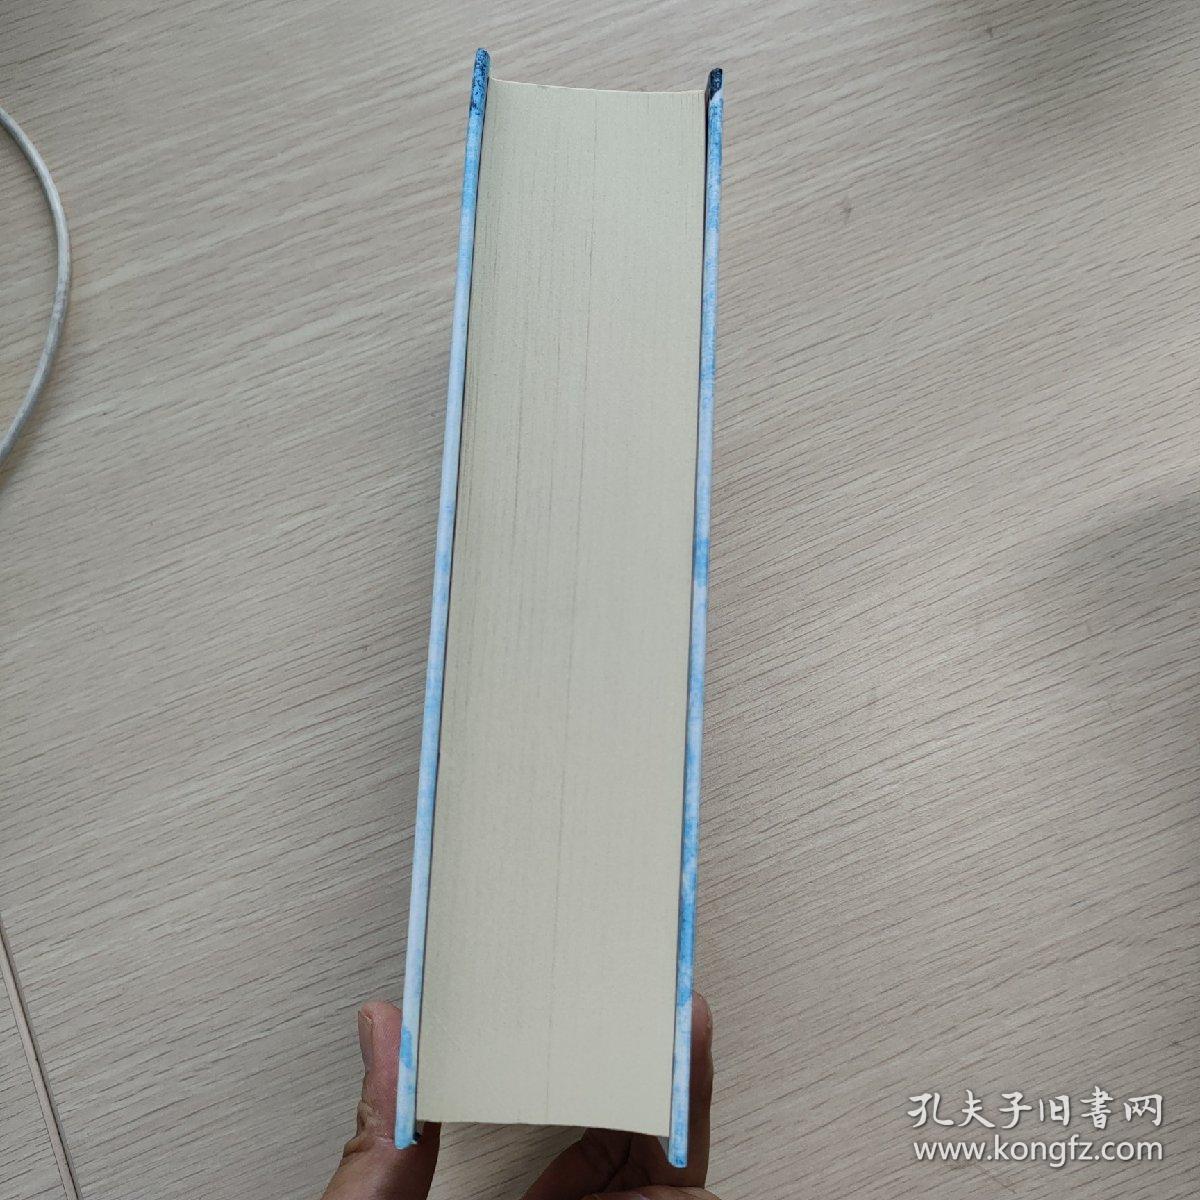 原版 Brothers by Yu Hua 兄弟 精装大32开 the Chinese bestsellers